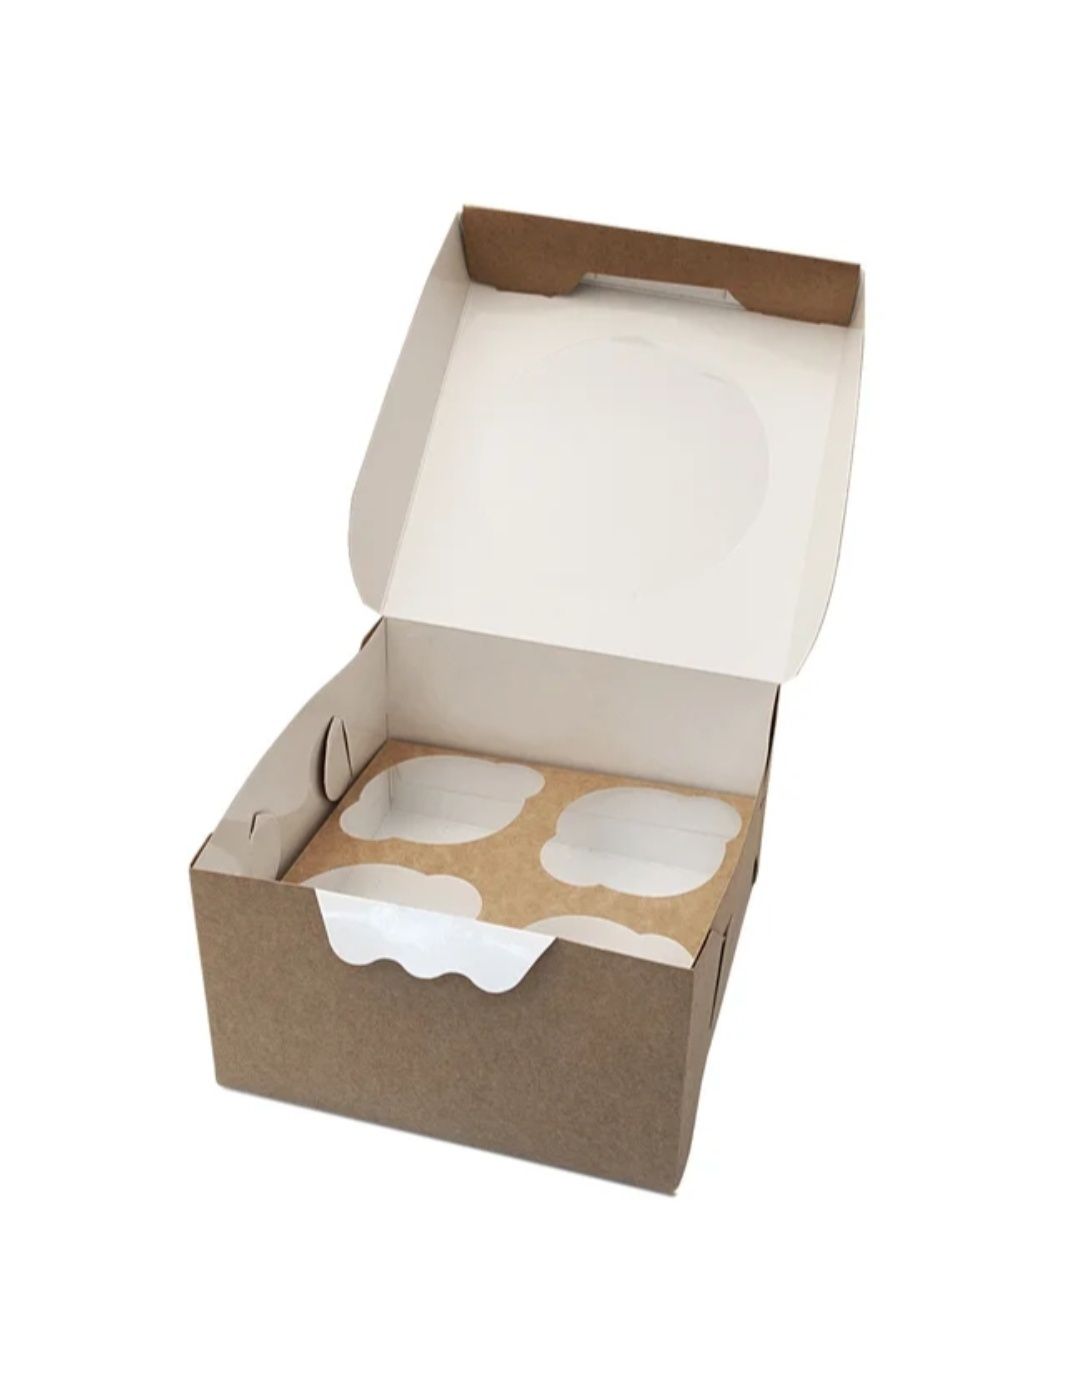 Коробка, купить коробки фаст - фуда, картонные коробки пищевые оптом